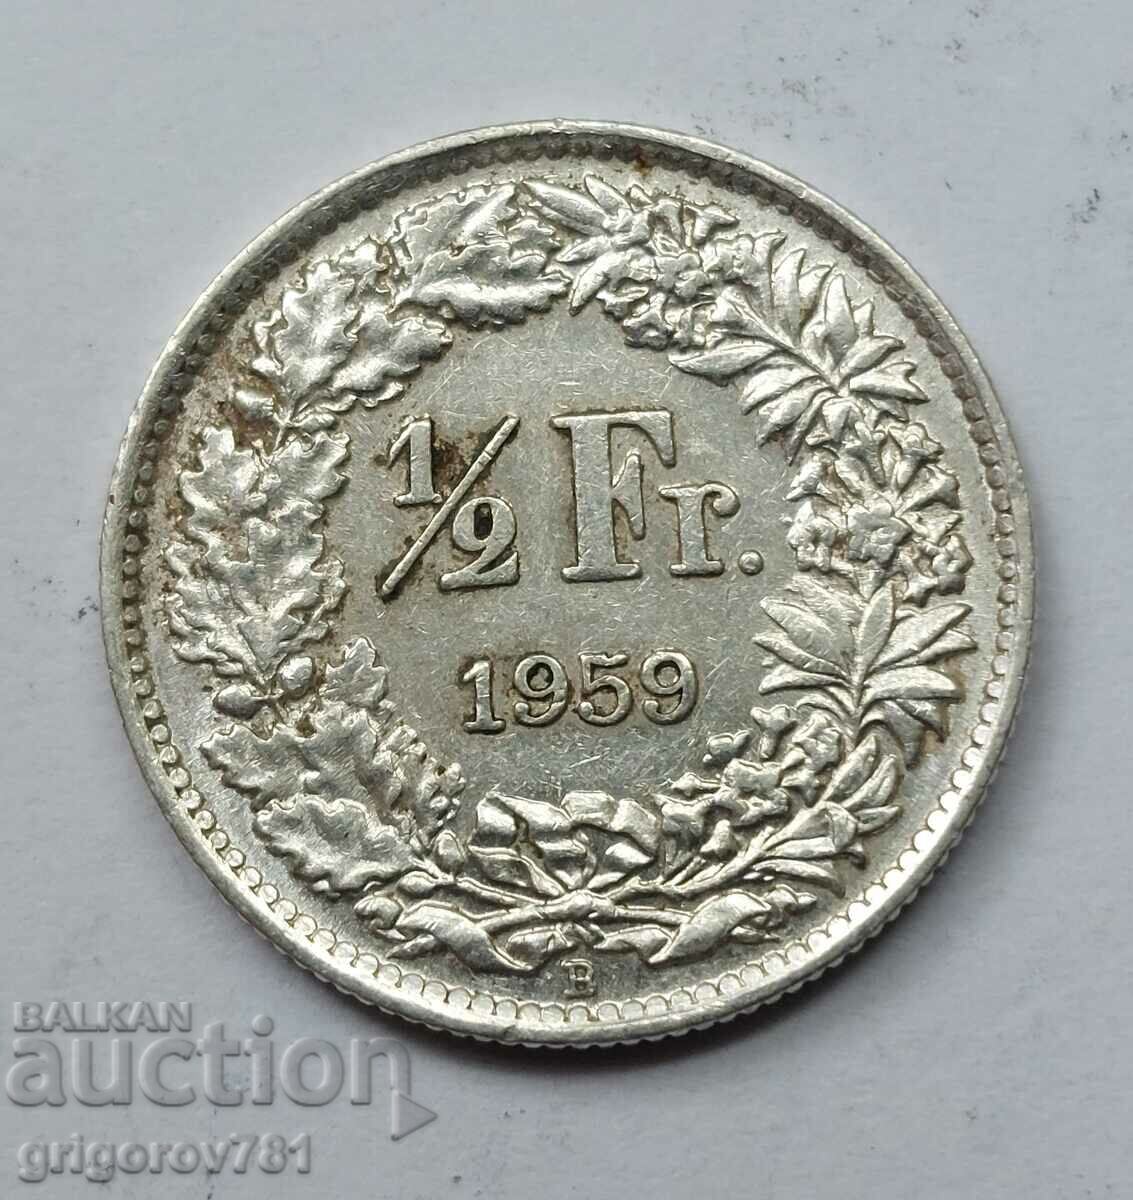 1/2 Franc Silver Switzerland 1959 B - Silver Coin #18